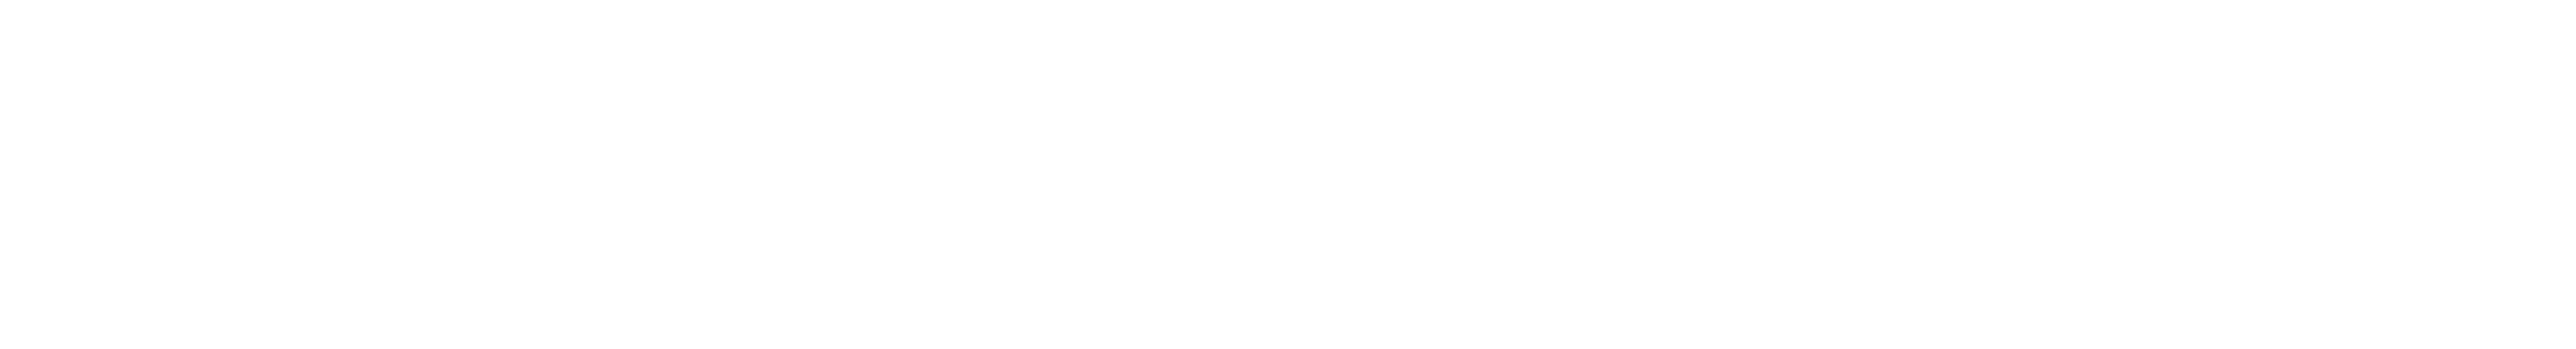 Cibes Lift Group logo